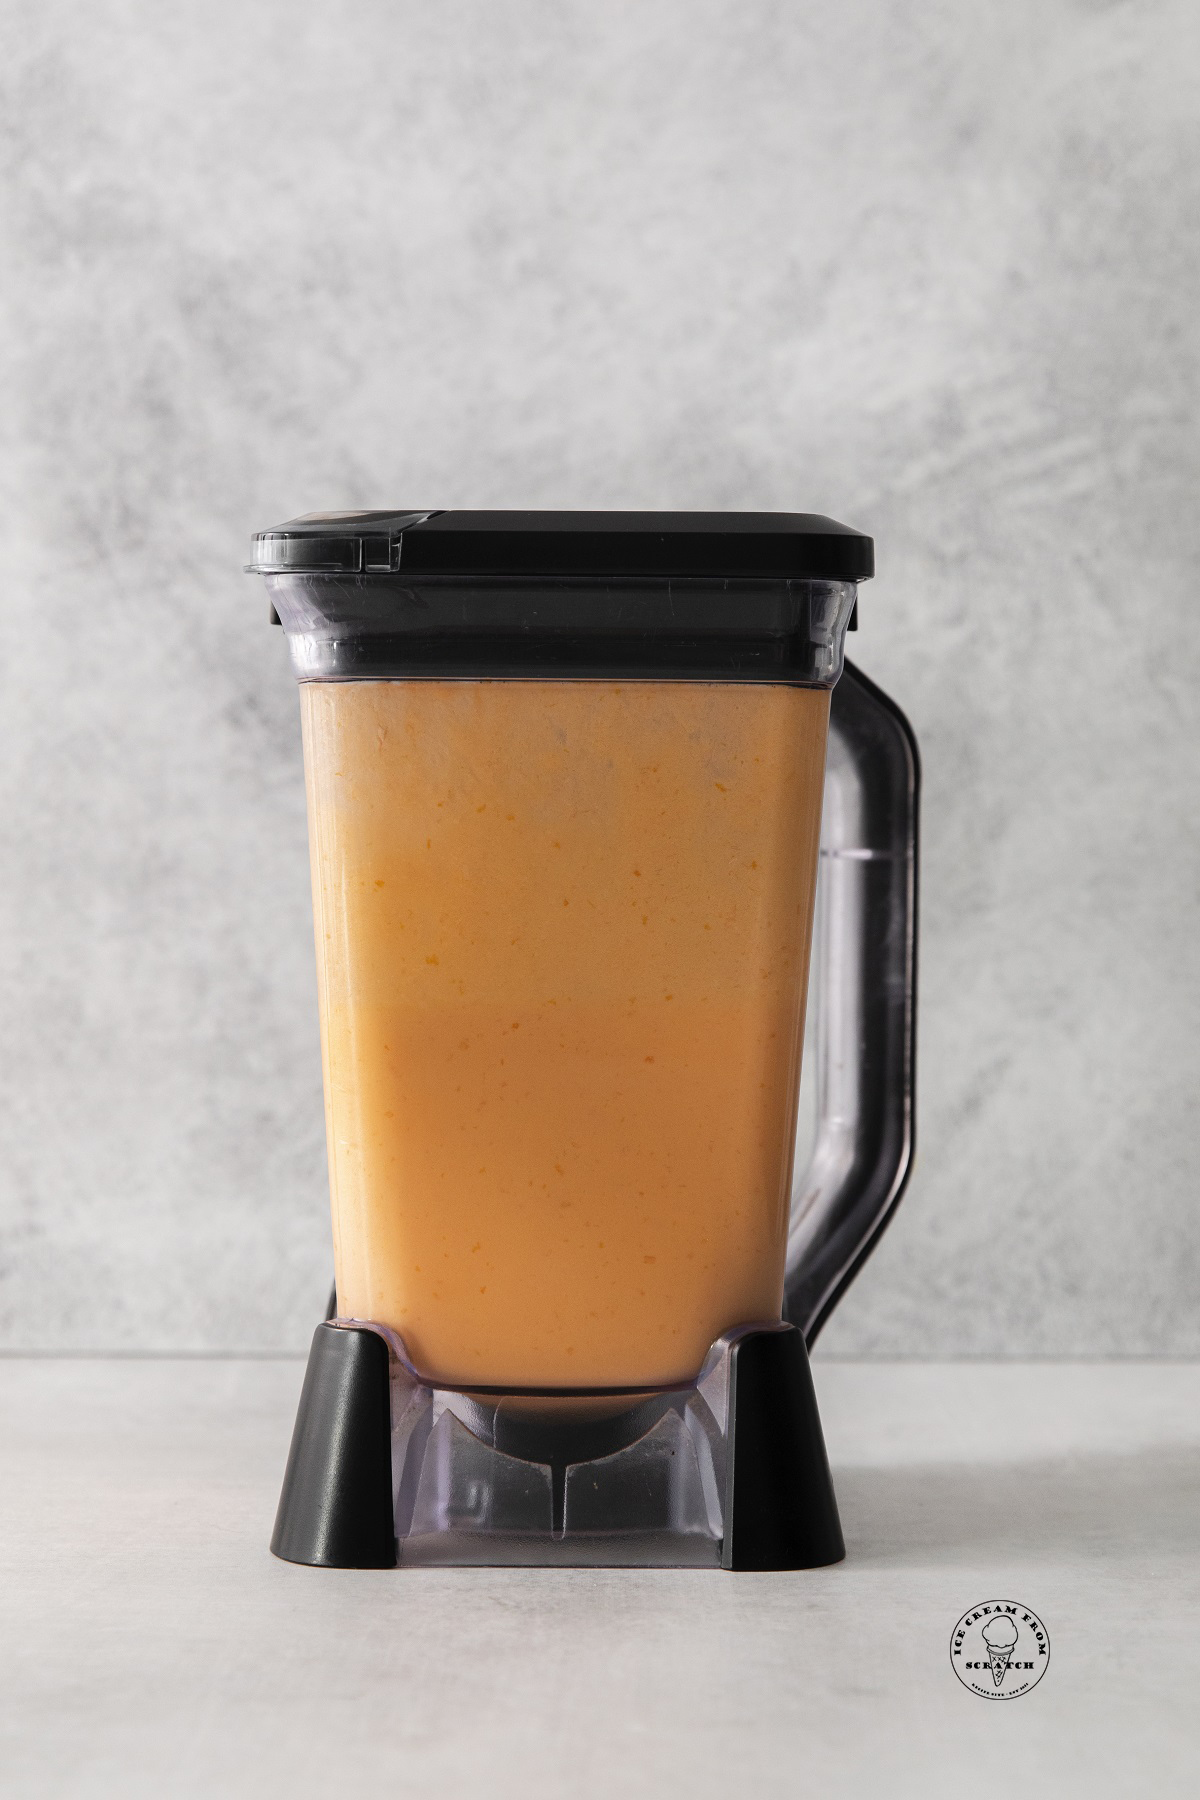 the base mixture for orange sherbet ice cream in a blender.